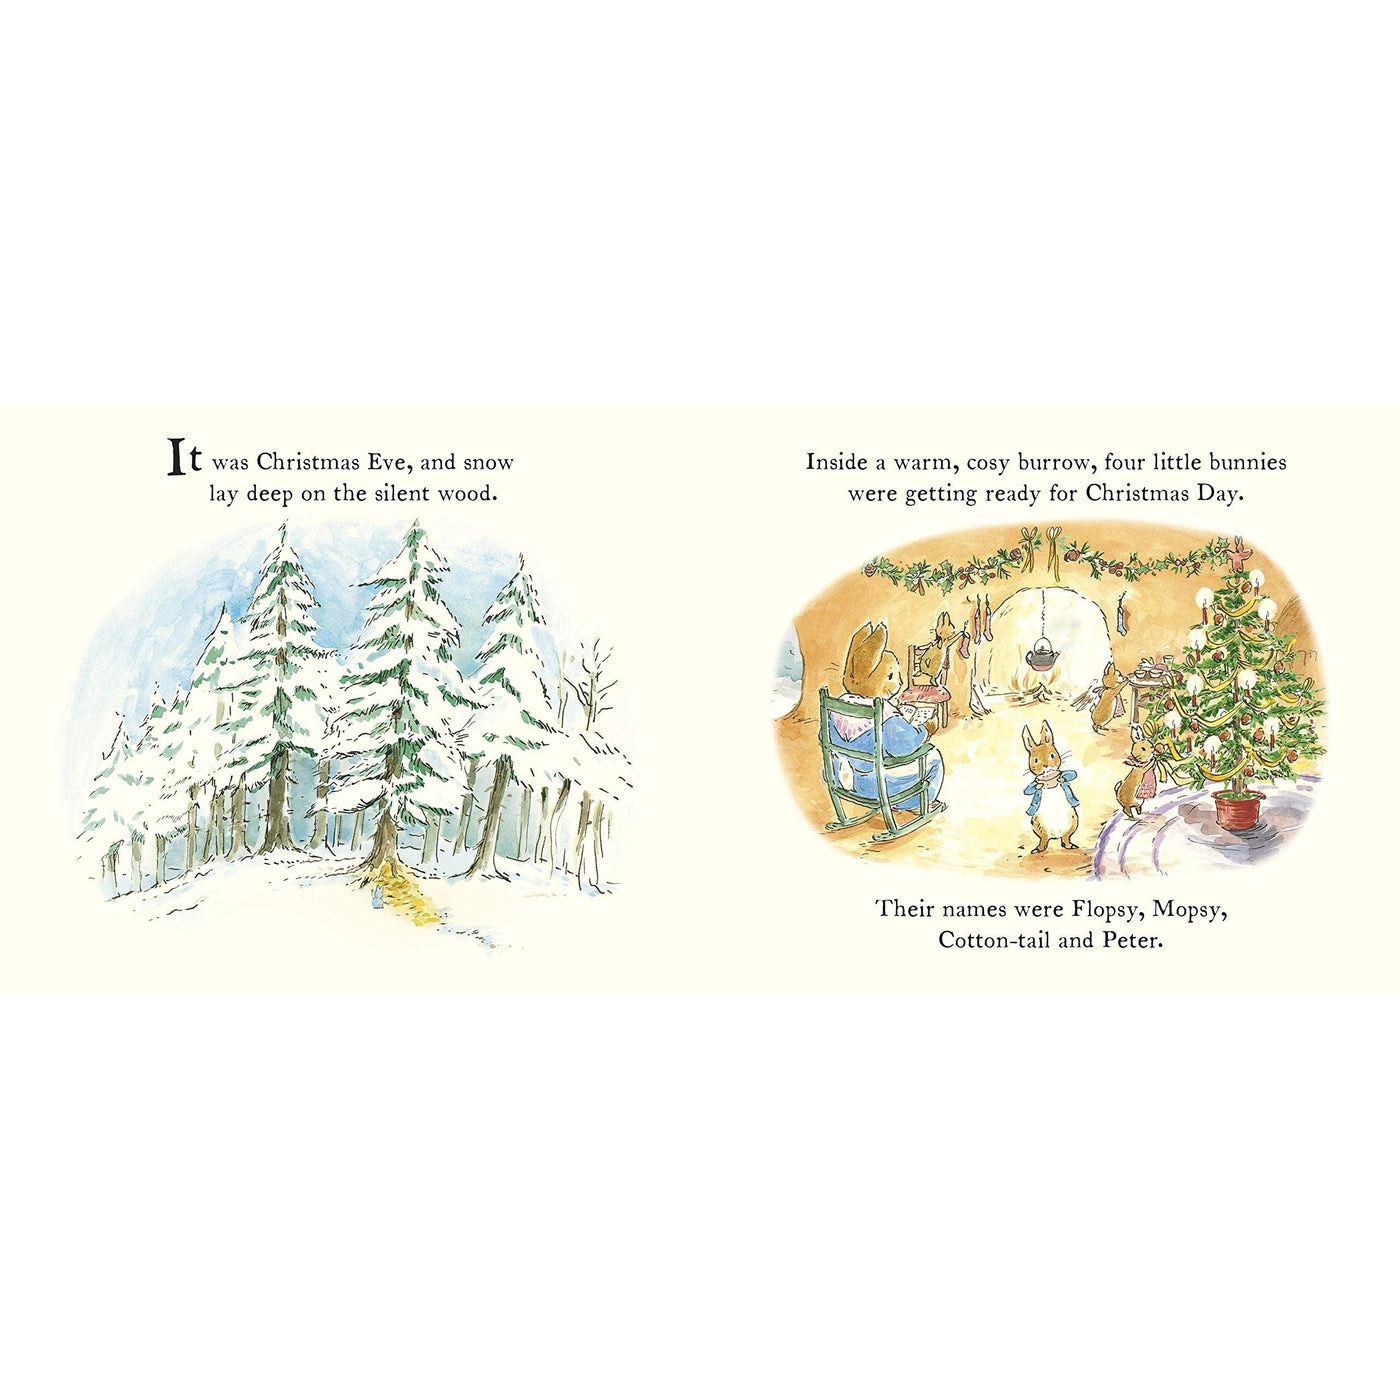 Peter Rabbit Tales: A Christmas Wish (Board Book) - Beatrix Potter